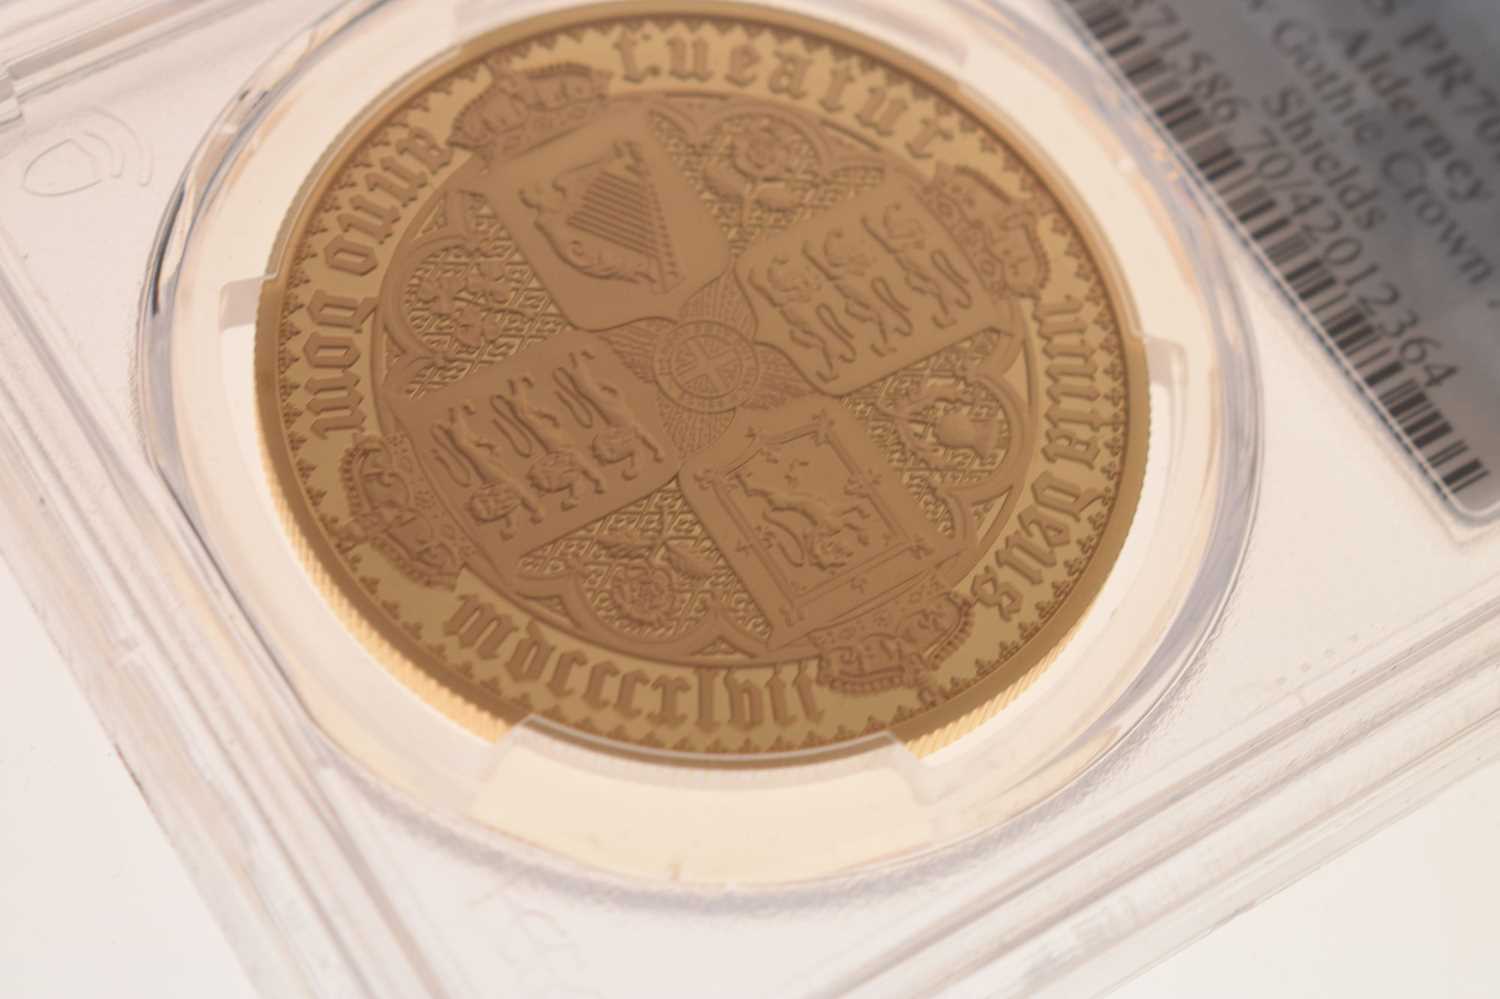 Alderney Elizabeth II New Gothic crown gold coin, 2021 - Image 7 of 10